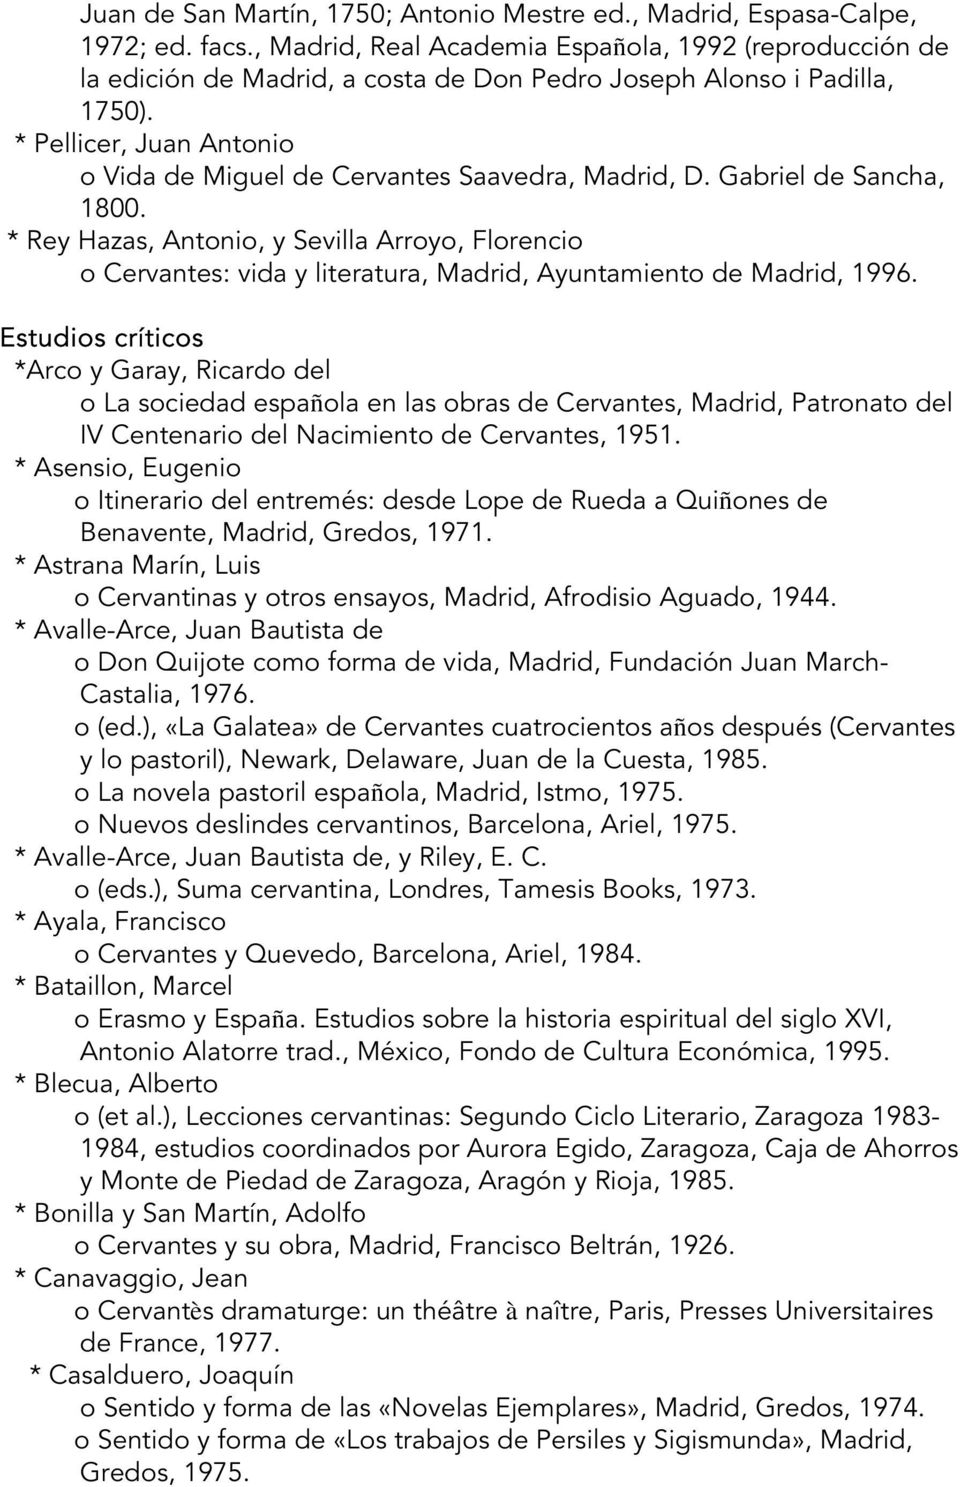 * Pellicer, Juan Antonio o Vida de Miguel de Cervantes Saavedra, Madrid, D. Gabriel de Sancha, 1800.